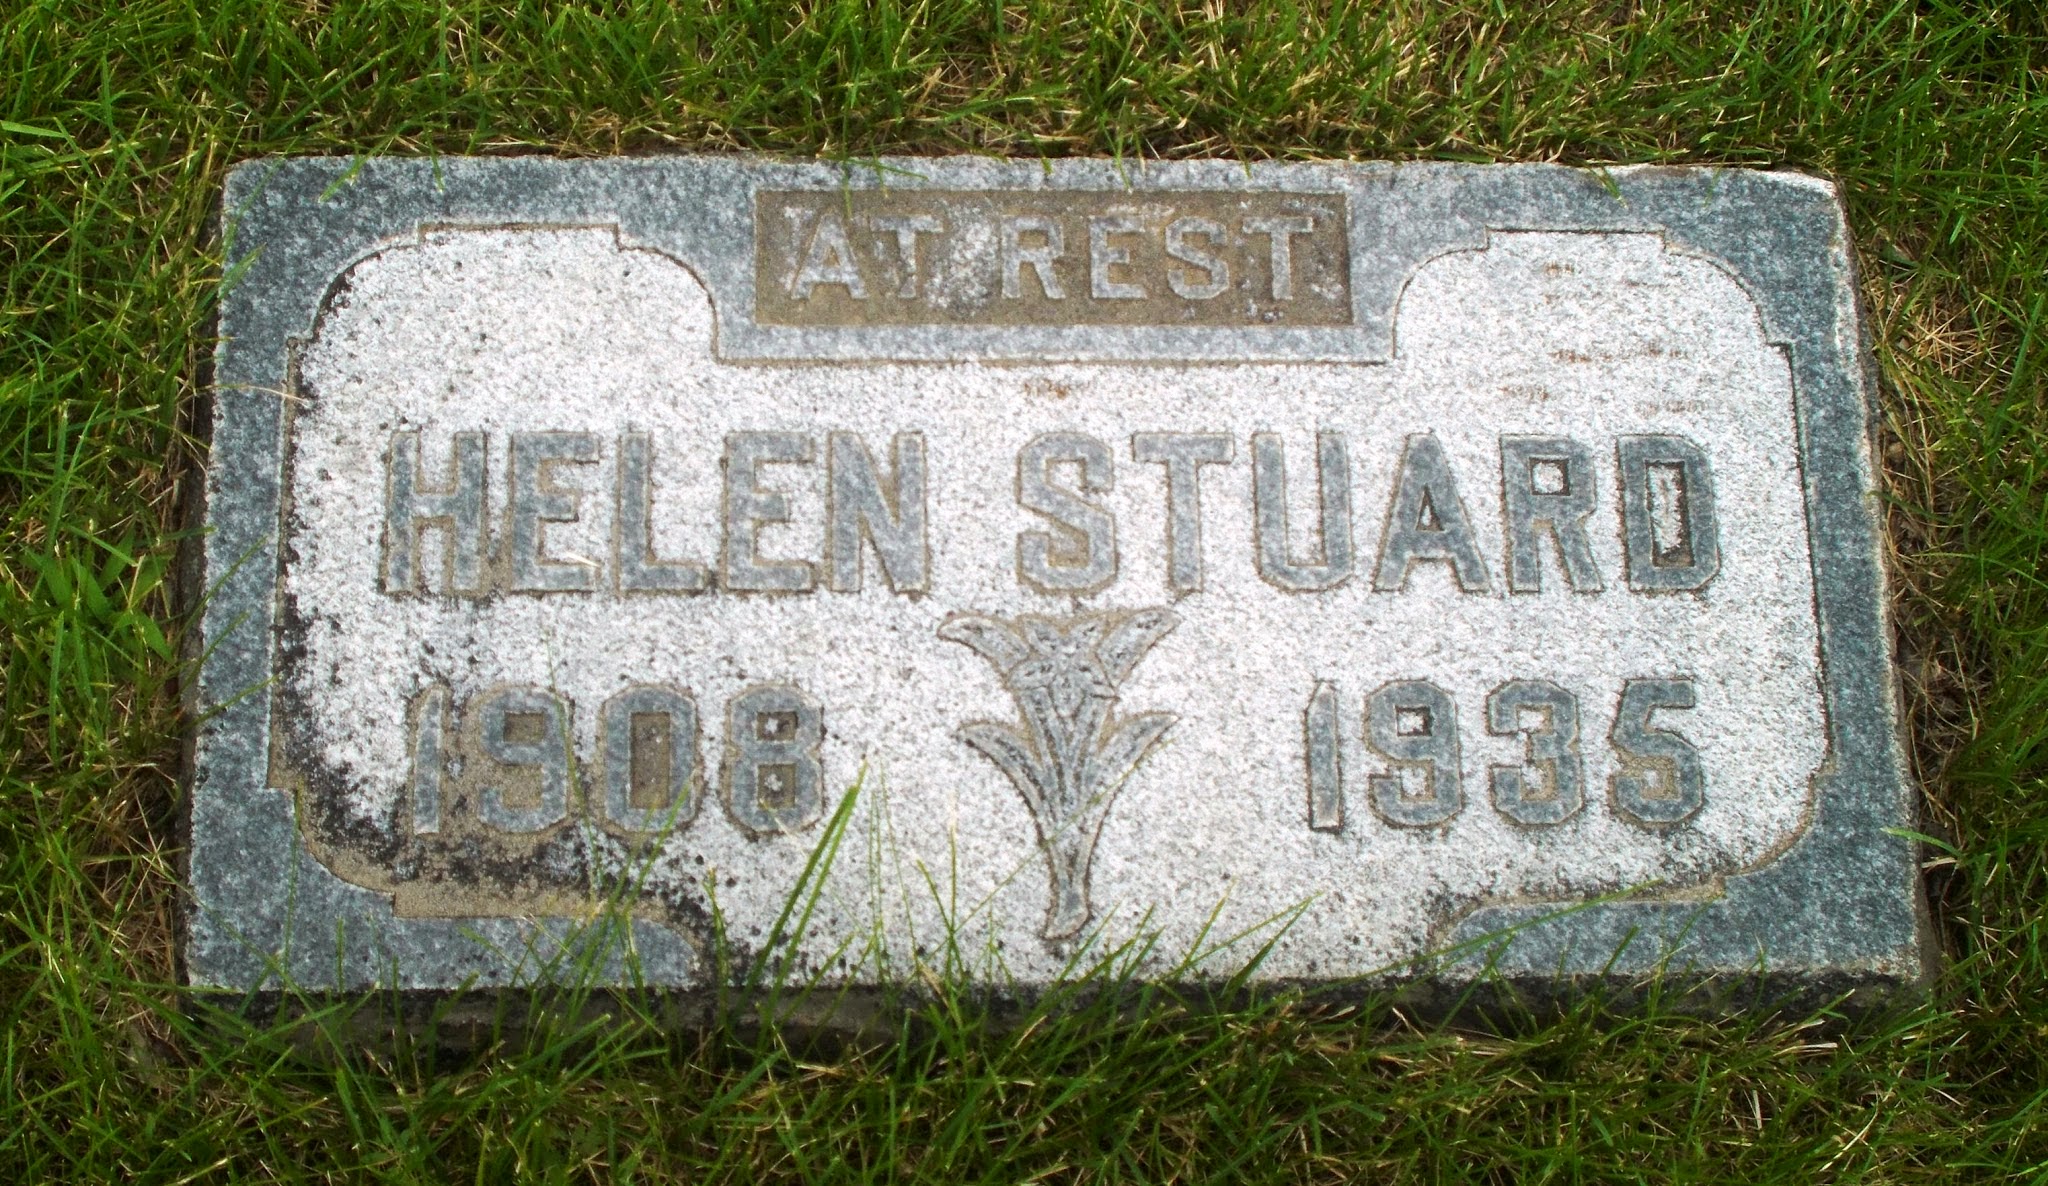 Helen Stuard